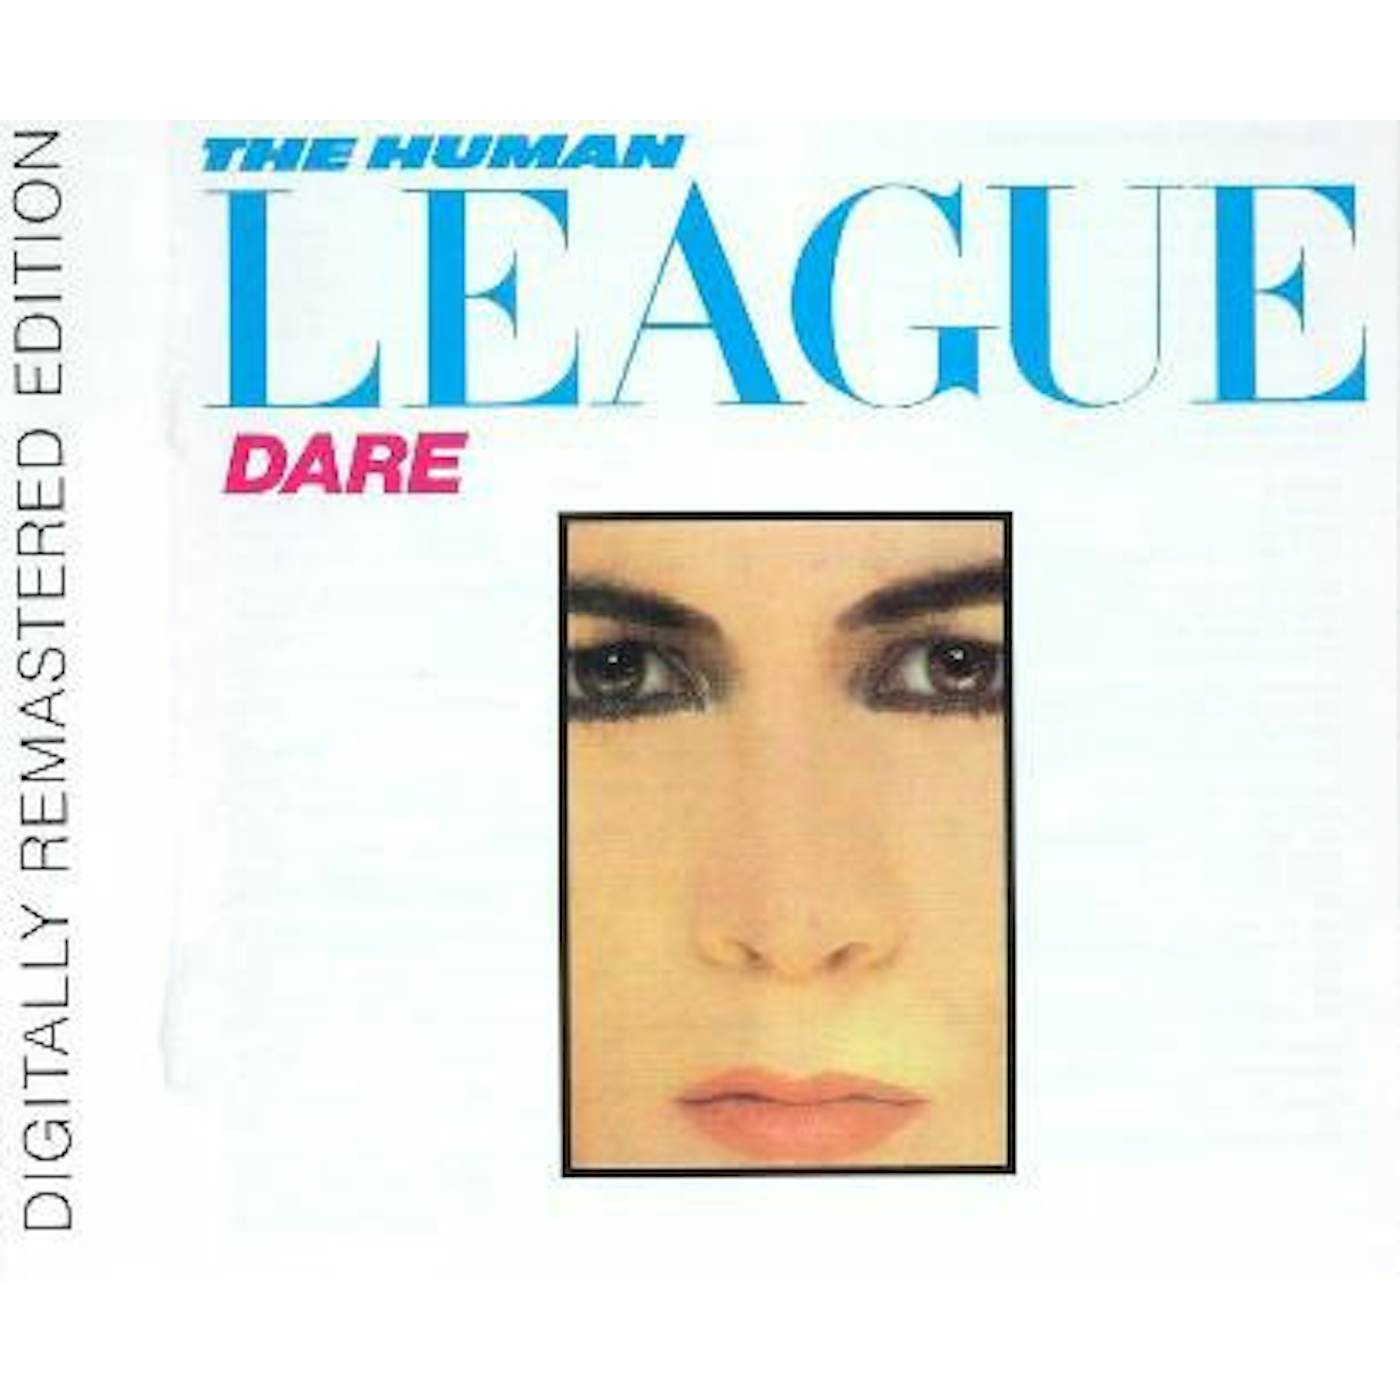 The Human League DARE CD